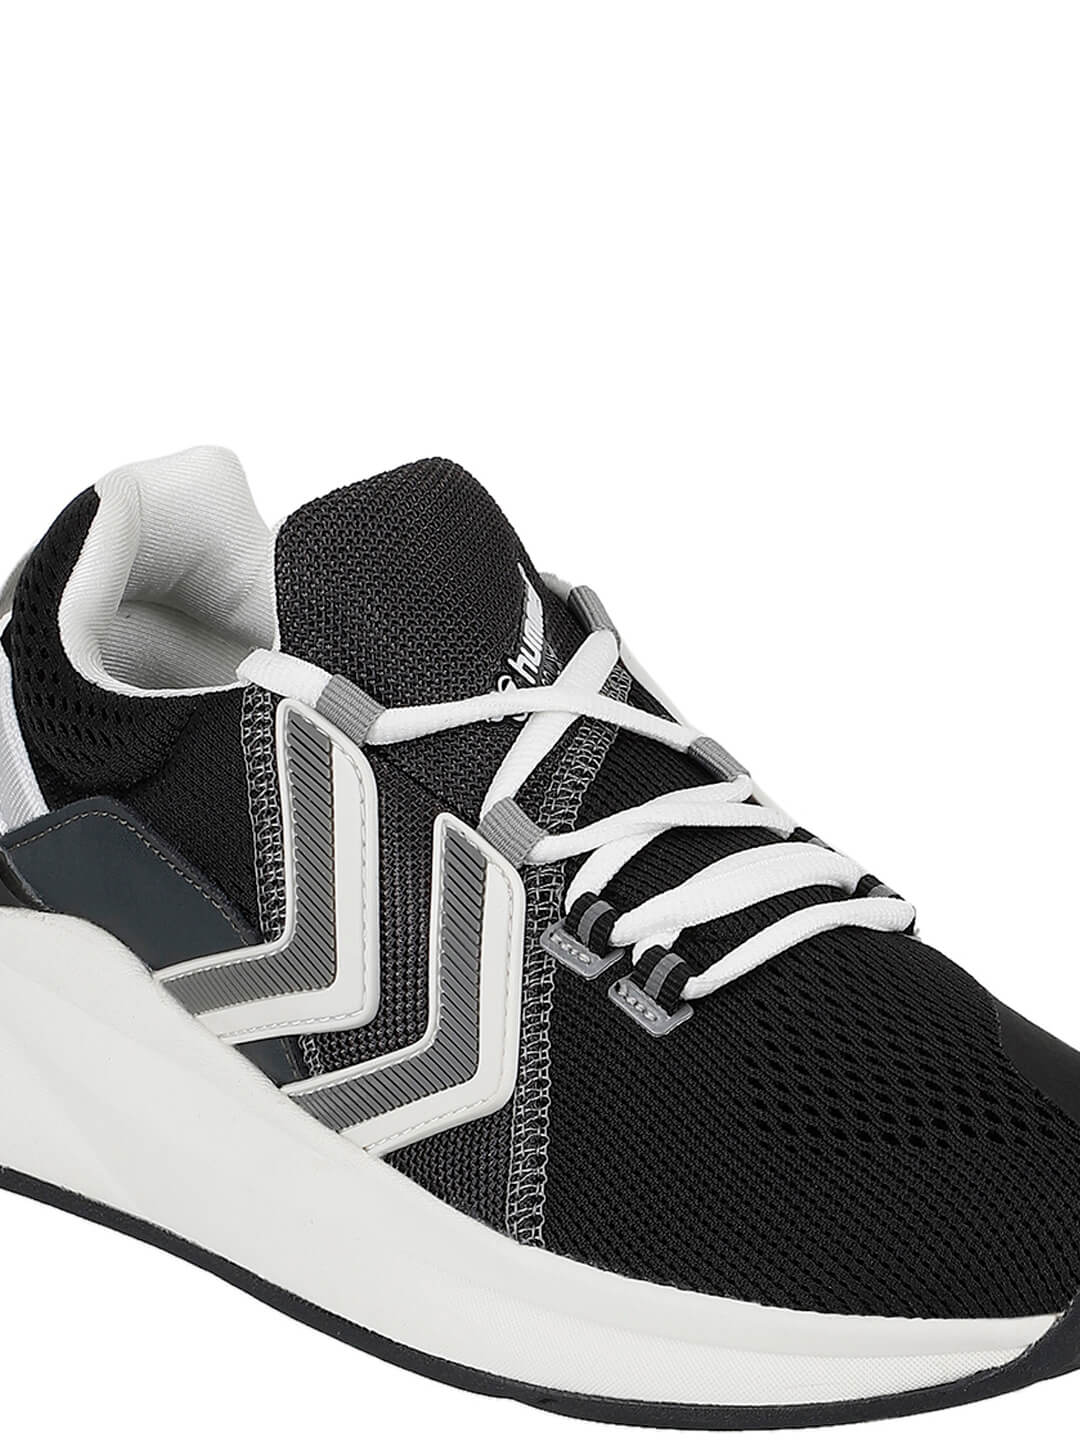 Unisex Reach Lx 300 Black Sneaker